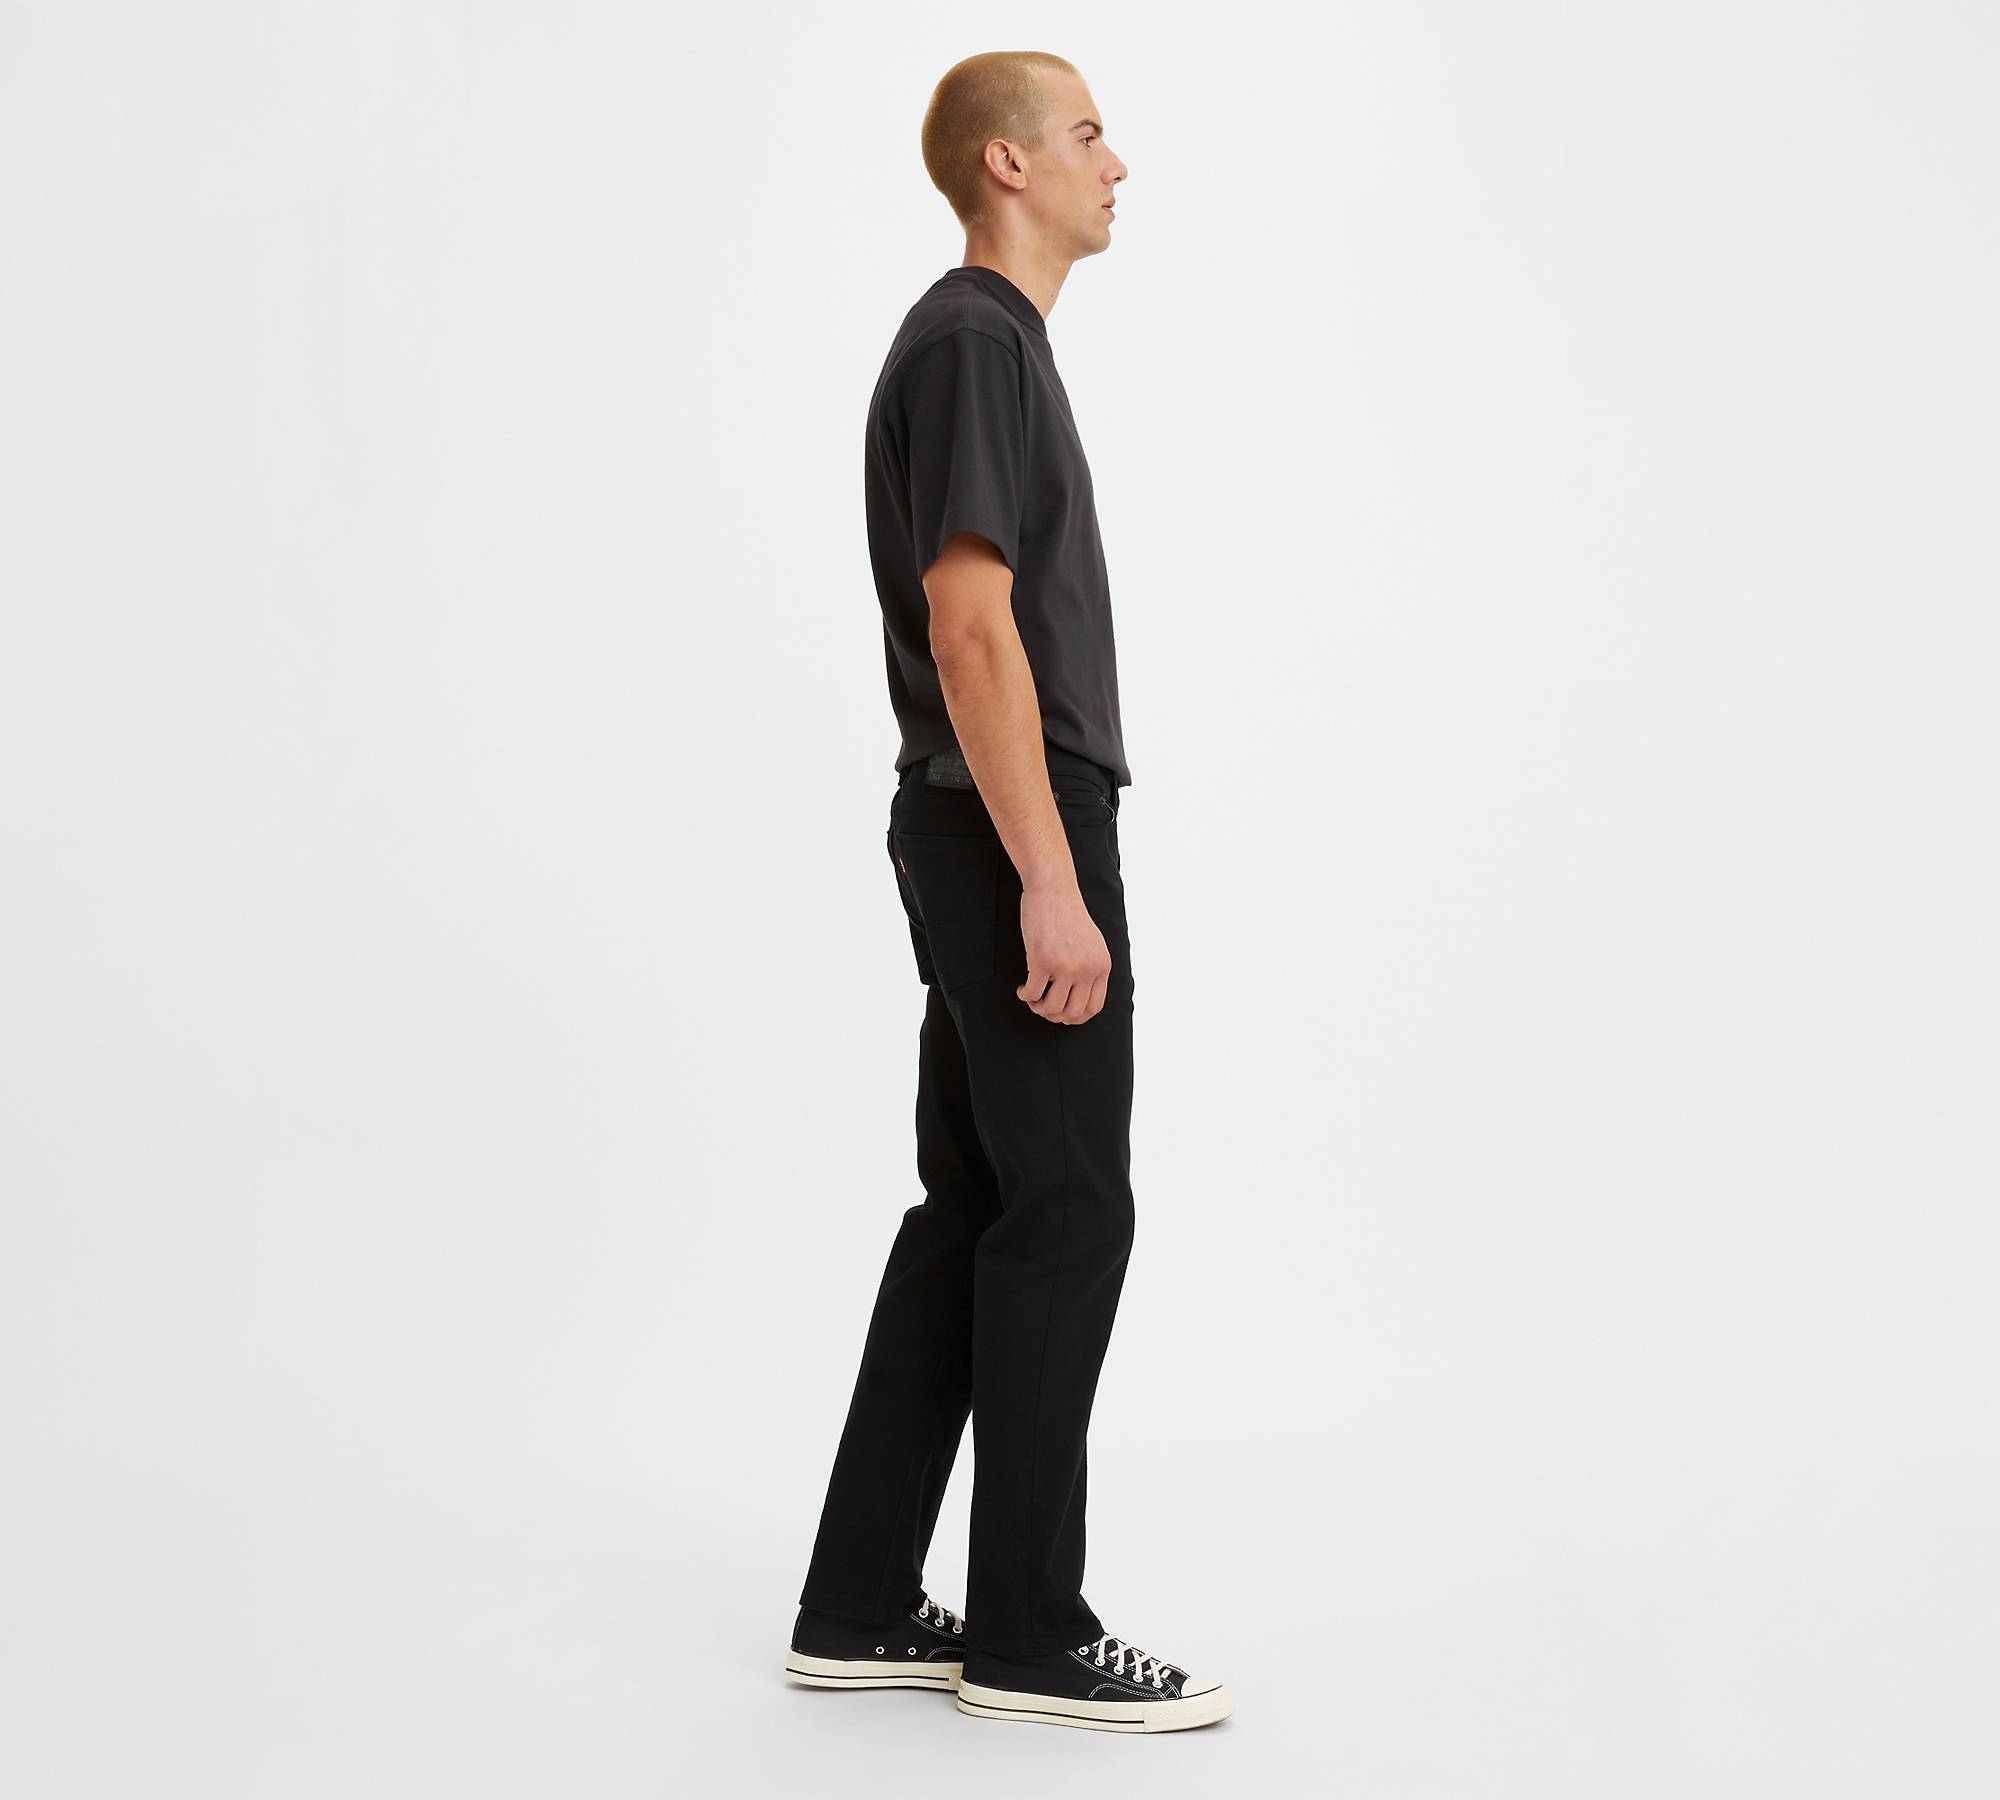 513™ Slim Straight Men's Jeans - Black | Levi's® US